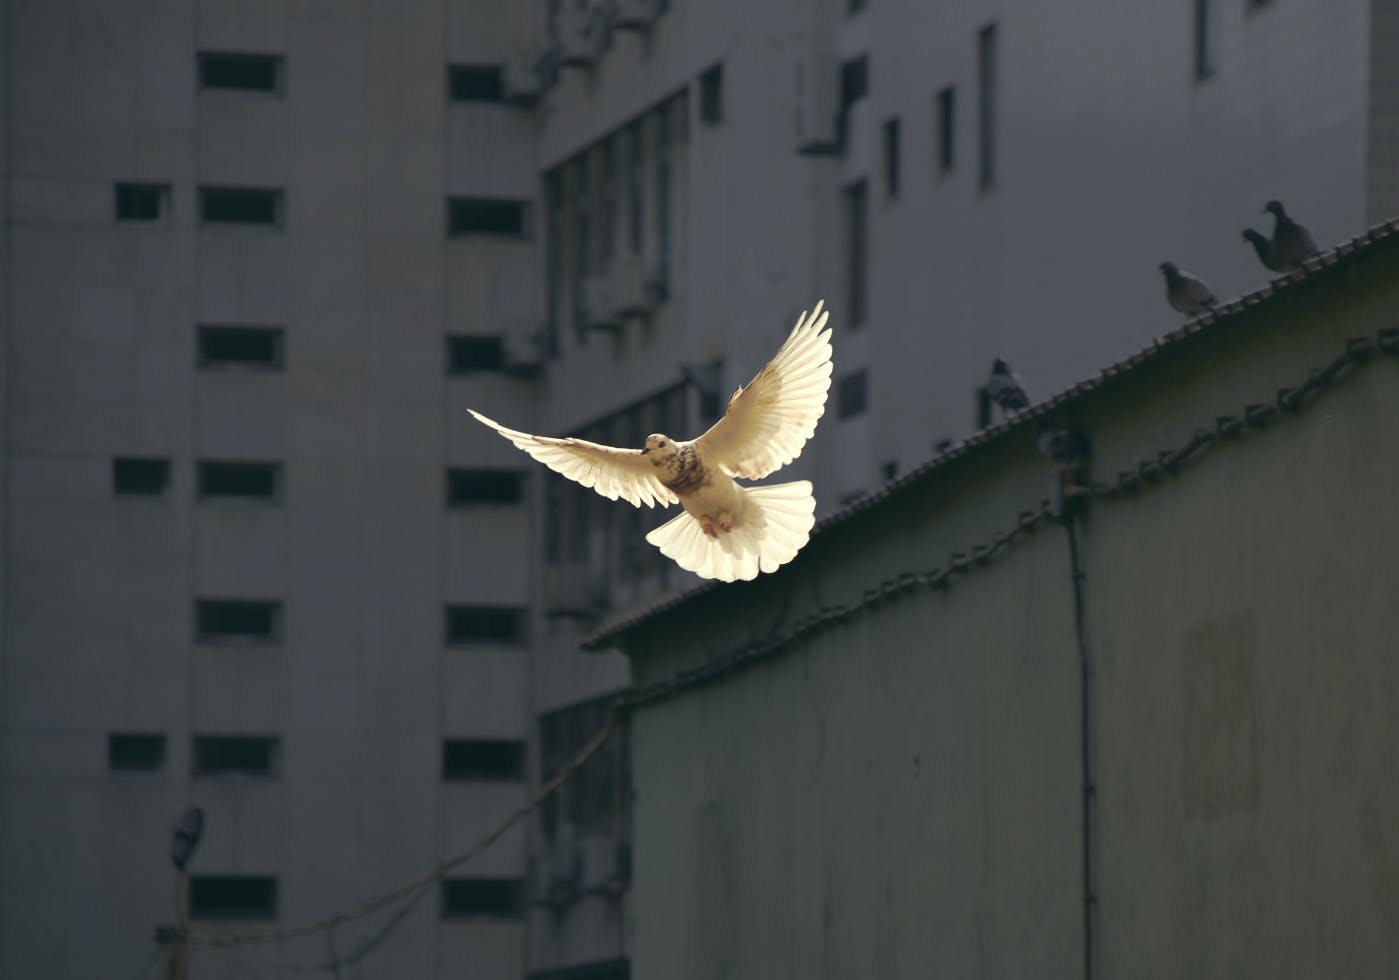 A dove in flight in a city